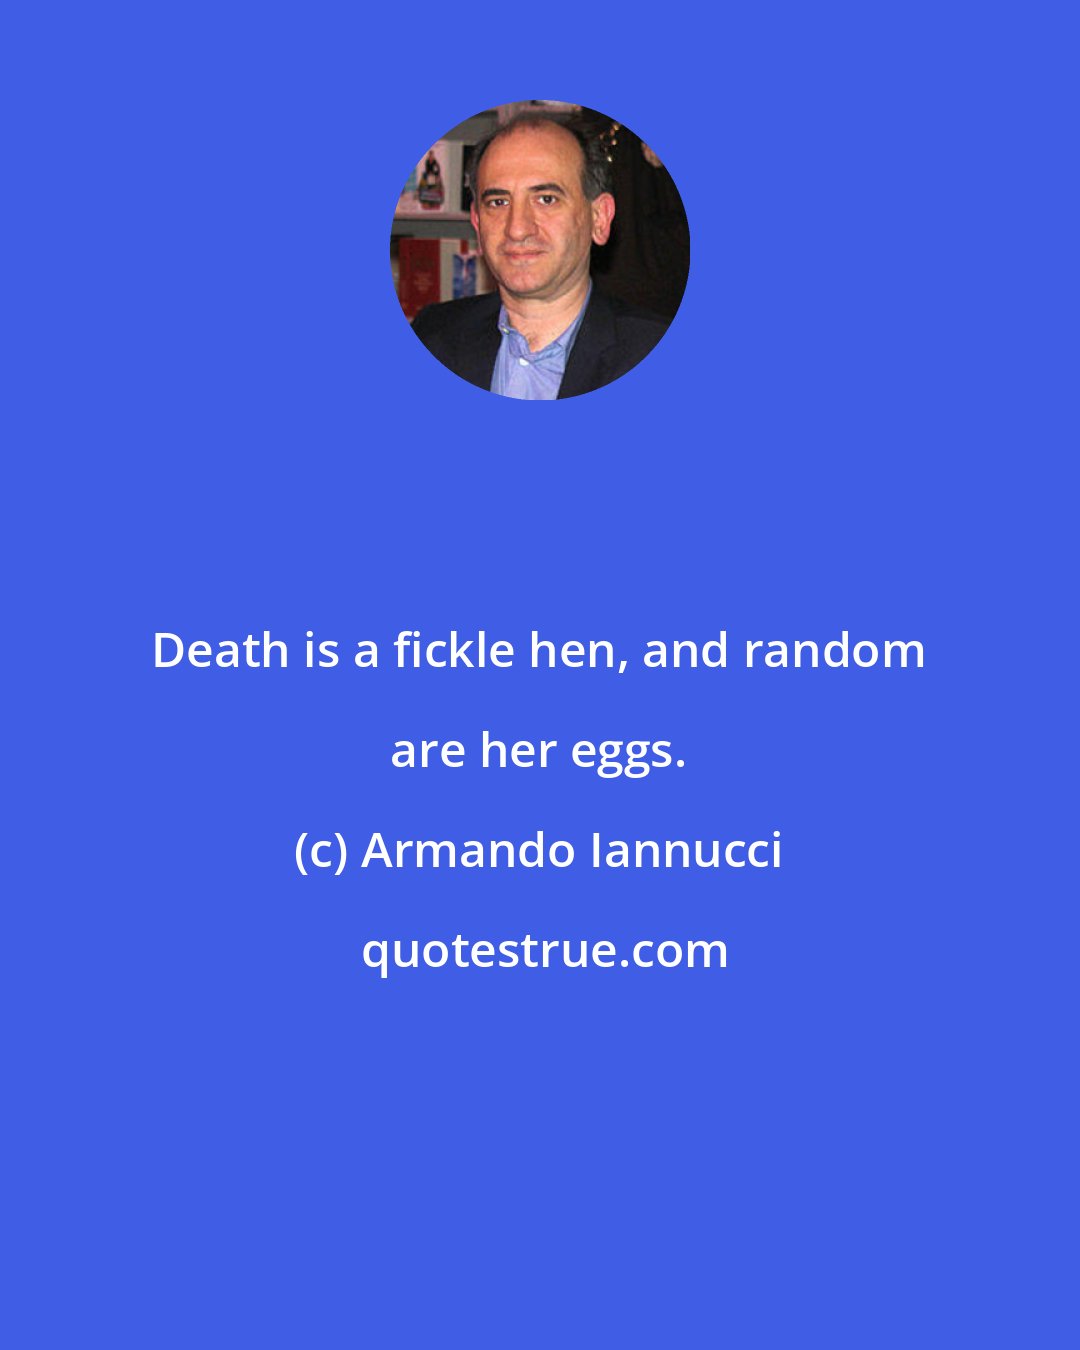 Armando Iannucci: Death is a fickle hen, and random are her eggs.